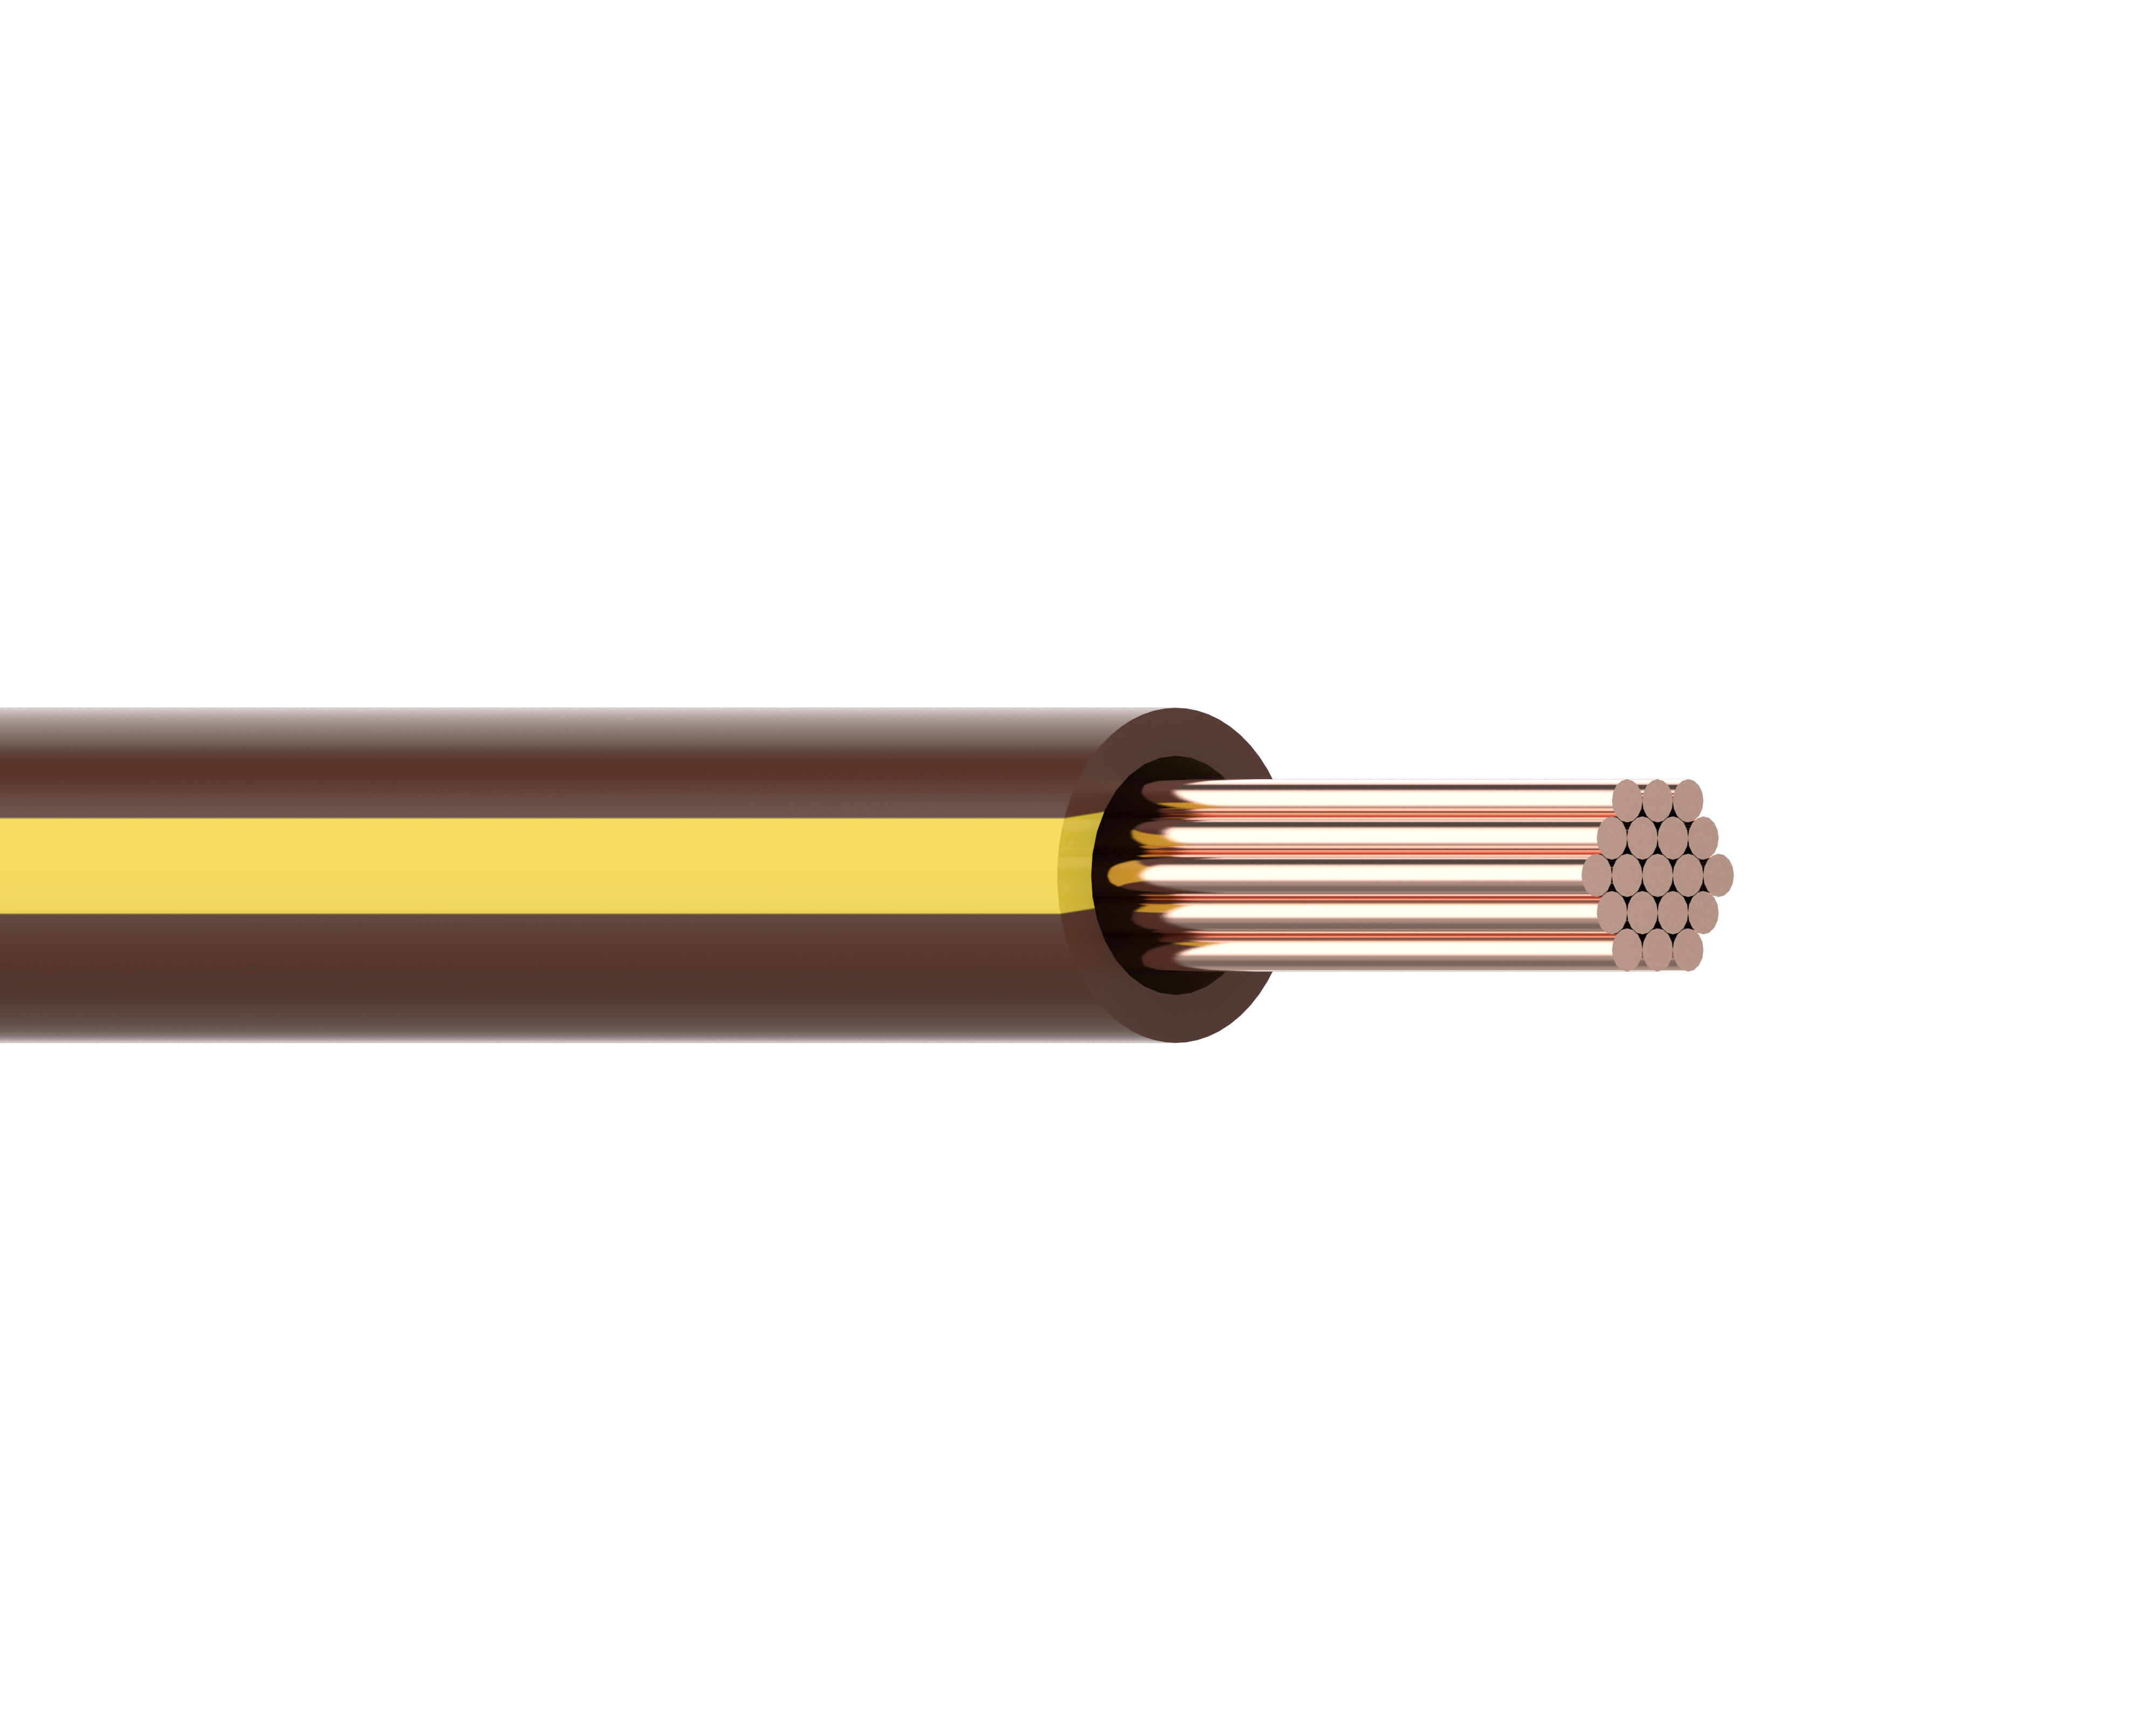 Primary wires V1 棕色+黃色條紋